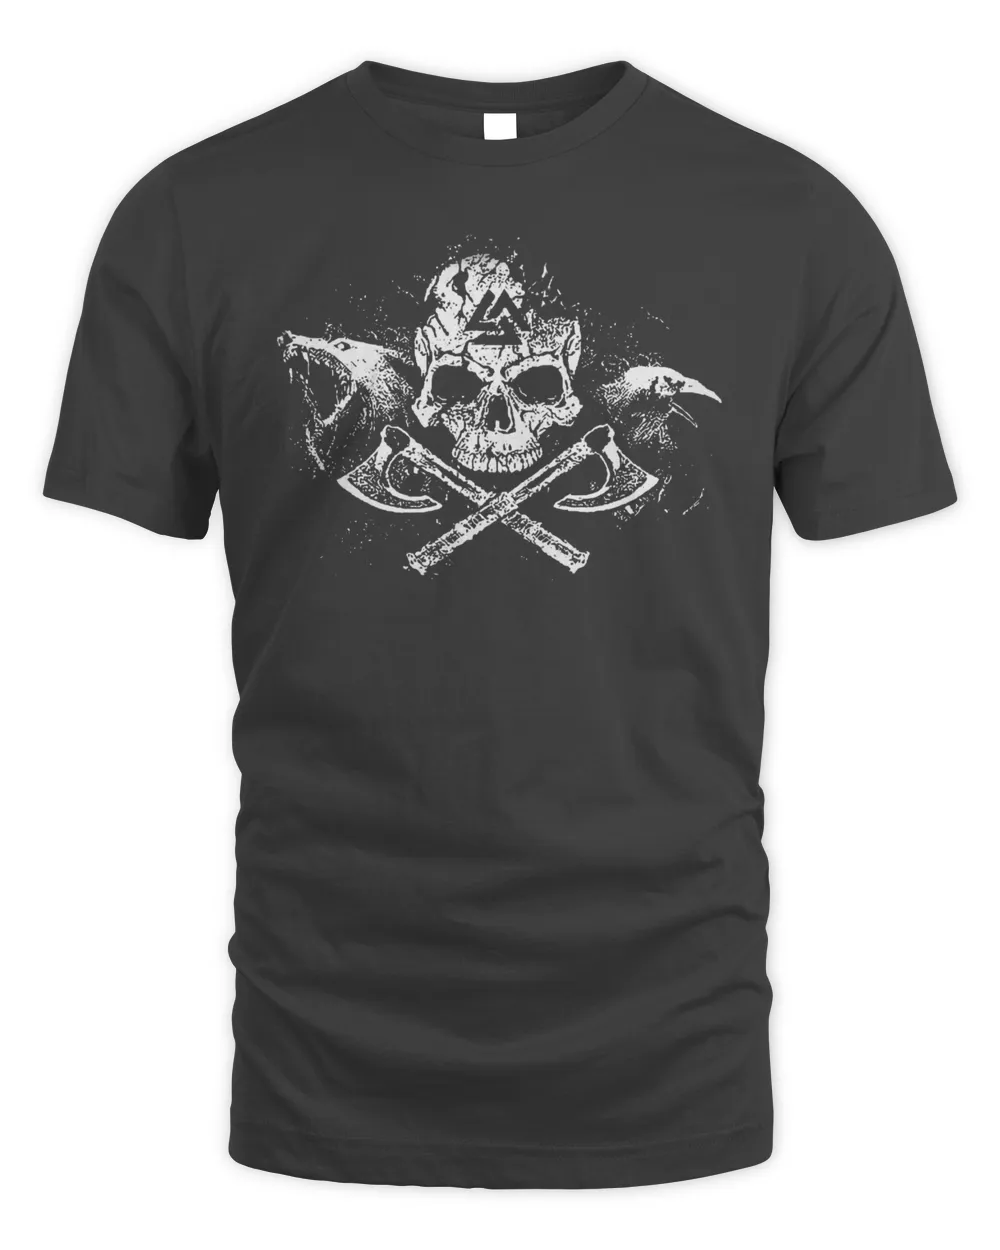 Viking T Shirt For men - Ax and skull